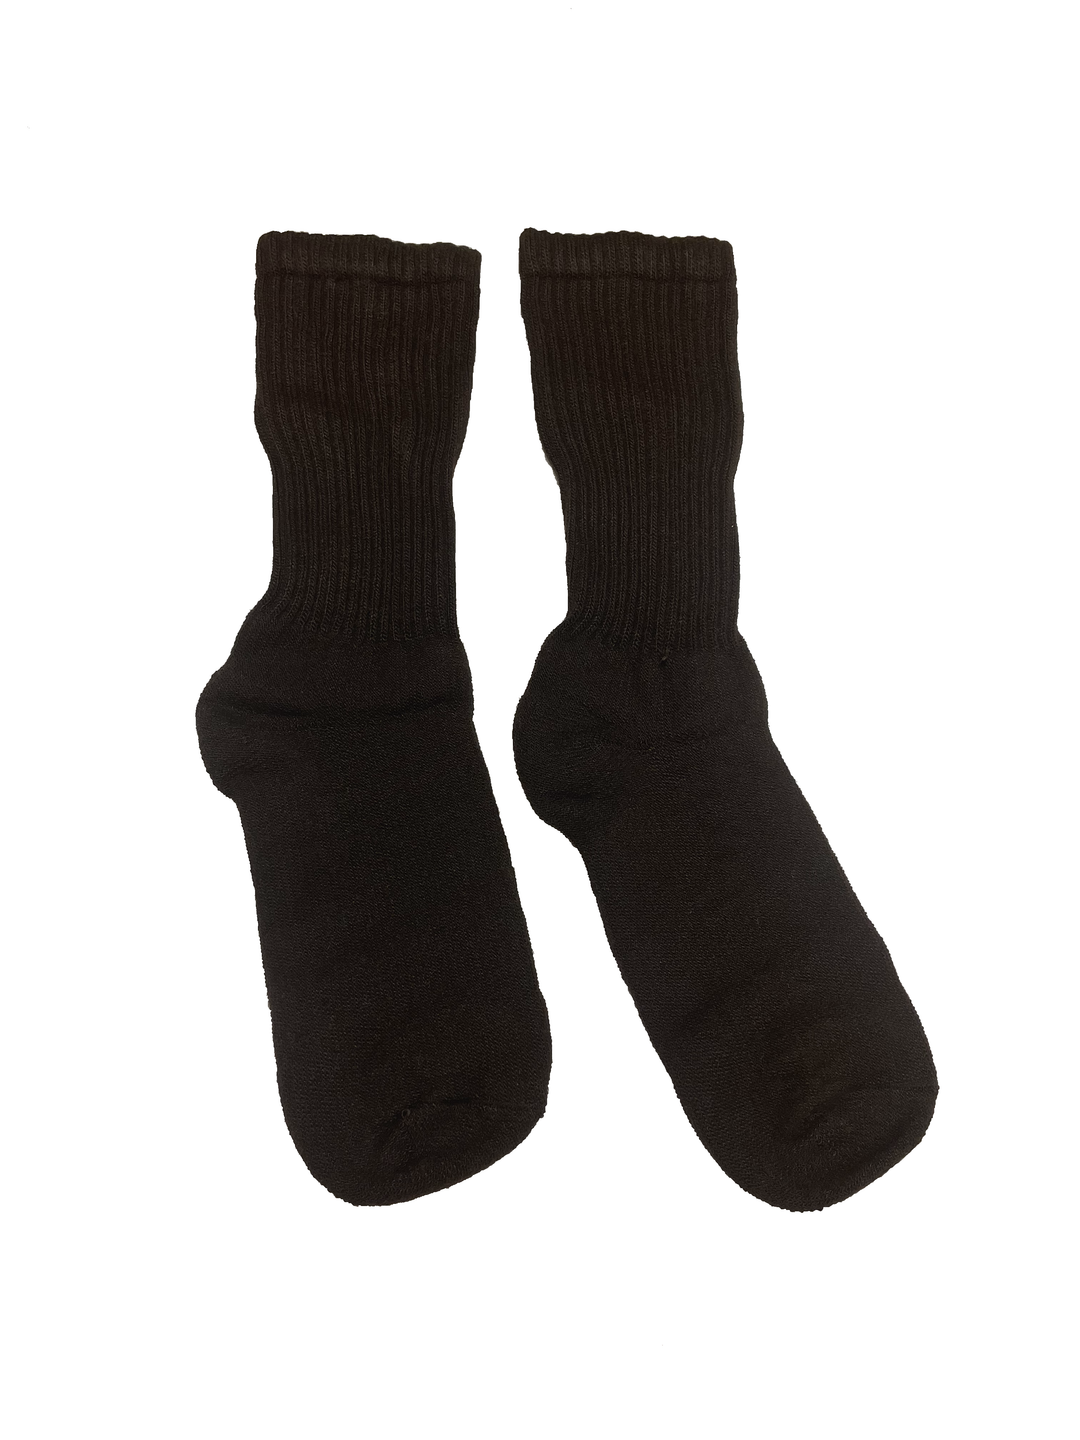 Sensi Foot Knee Sock Brown 6-Pack - Medicool